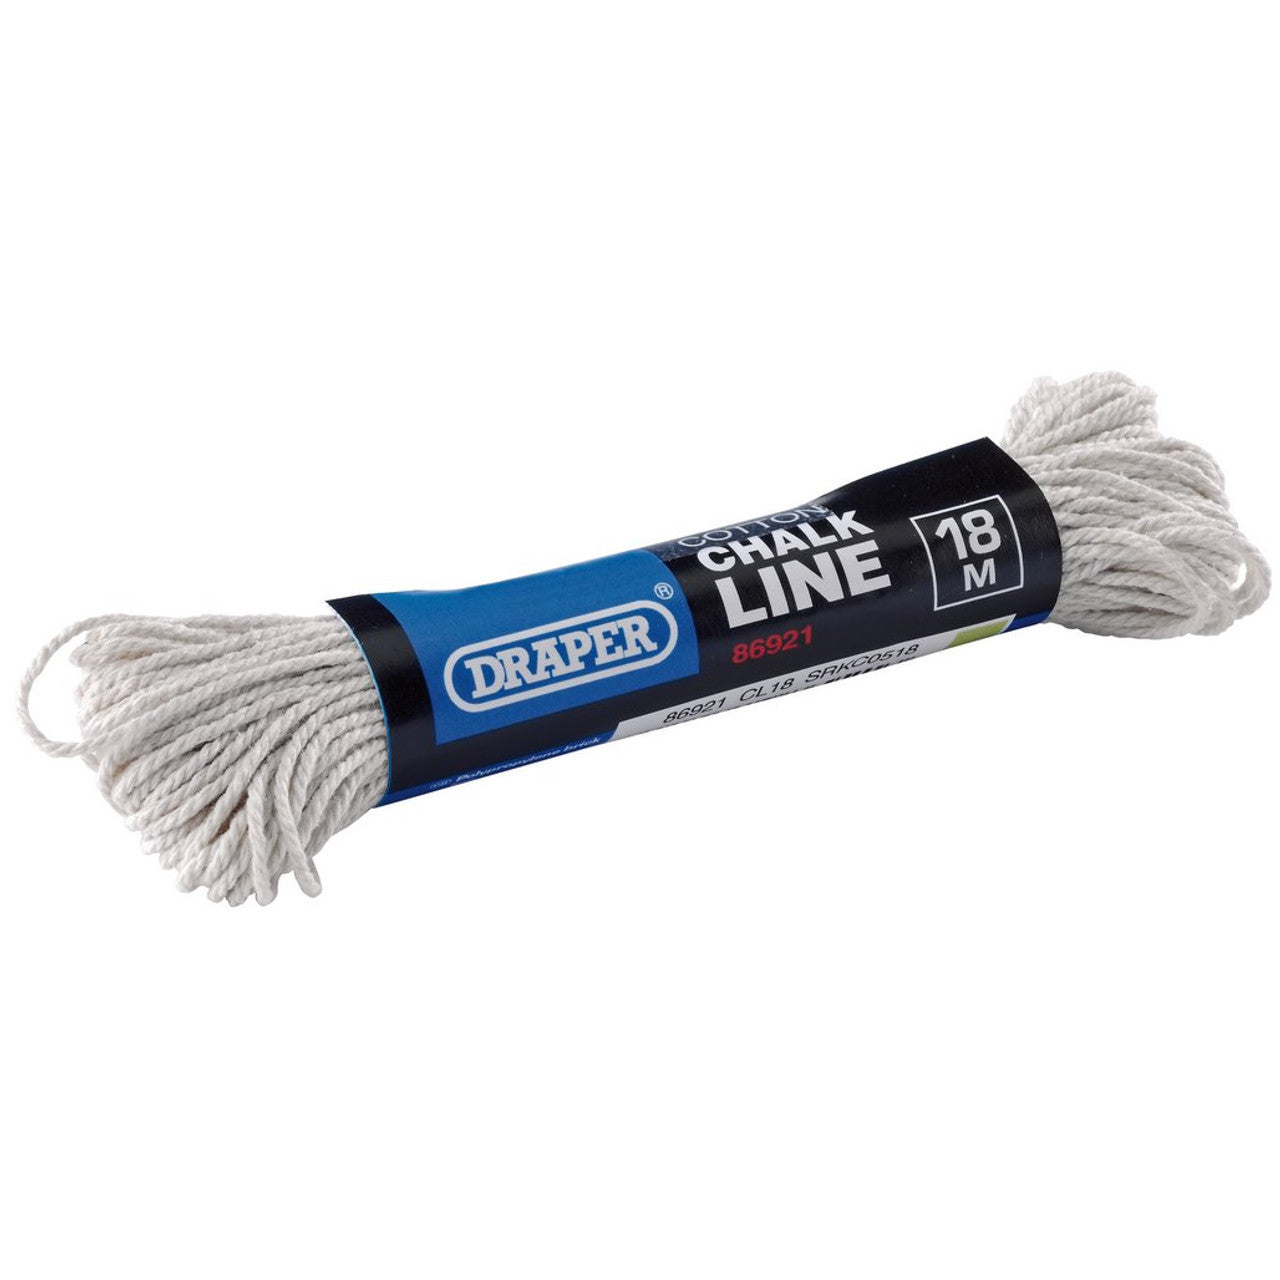 Draper 86921 18M Cotton Chalk Lines